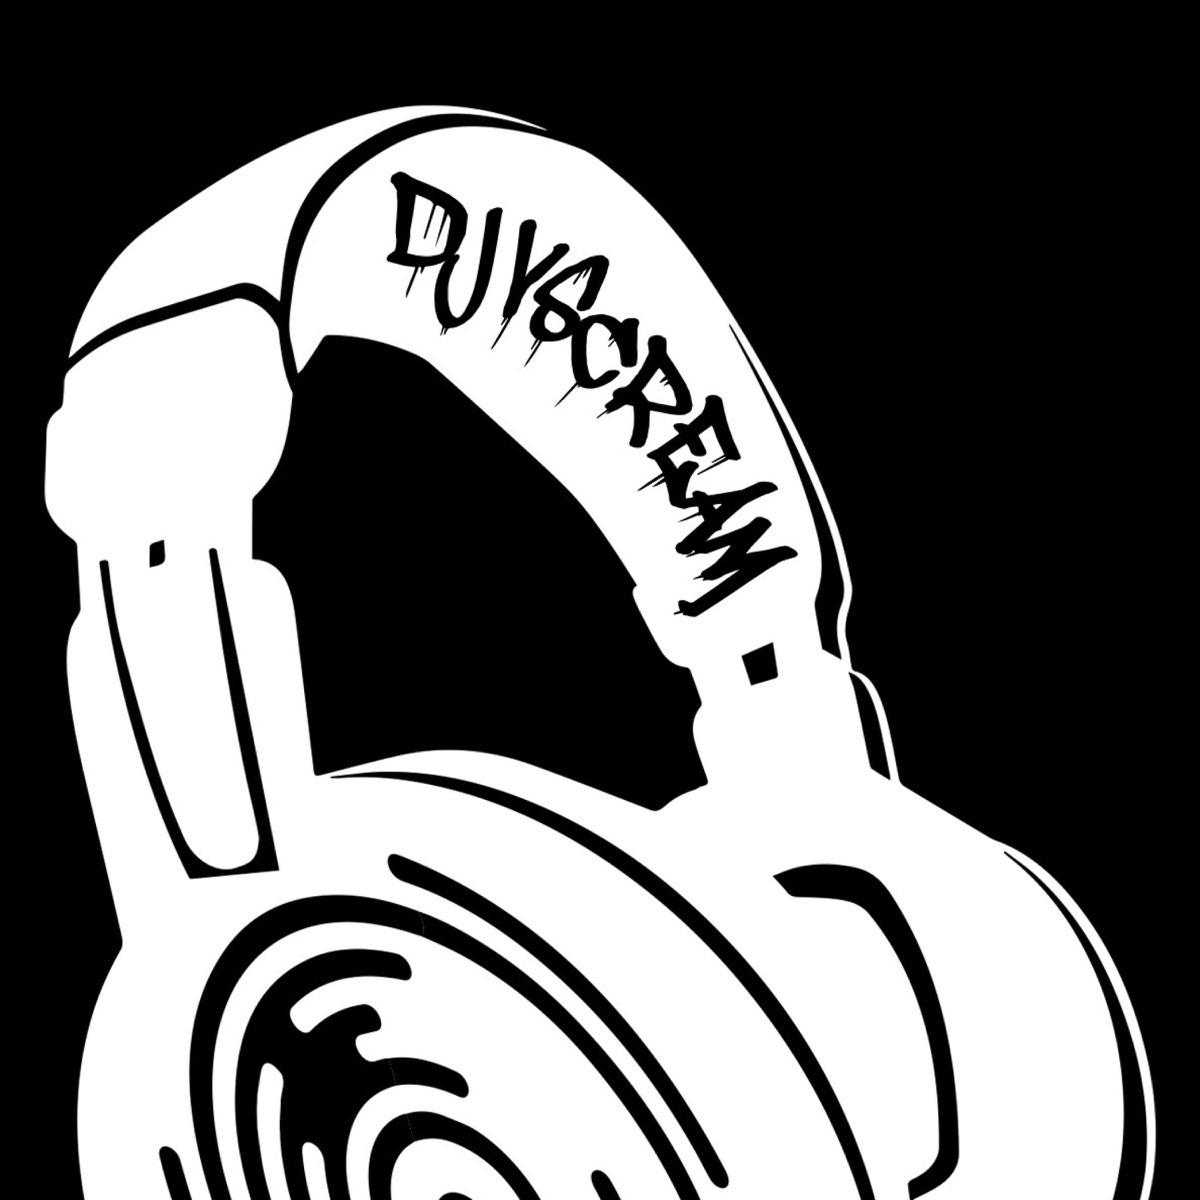 XXXDREAM - Single - Album by djvscream - Apple Music